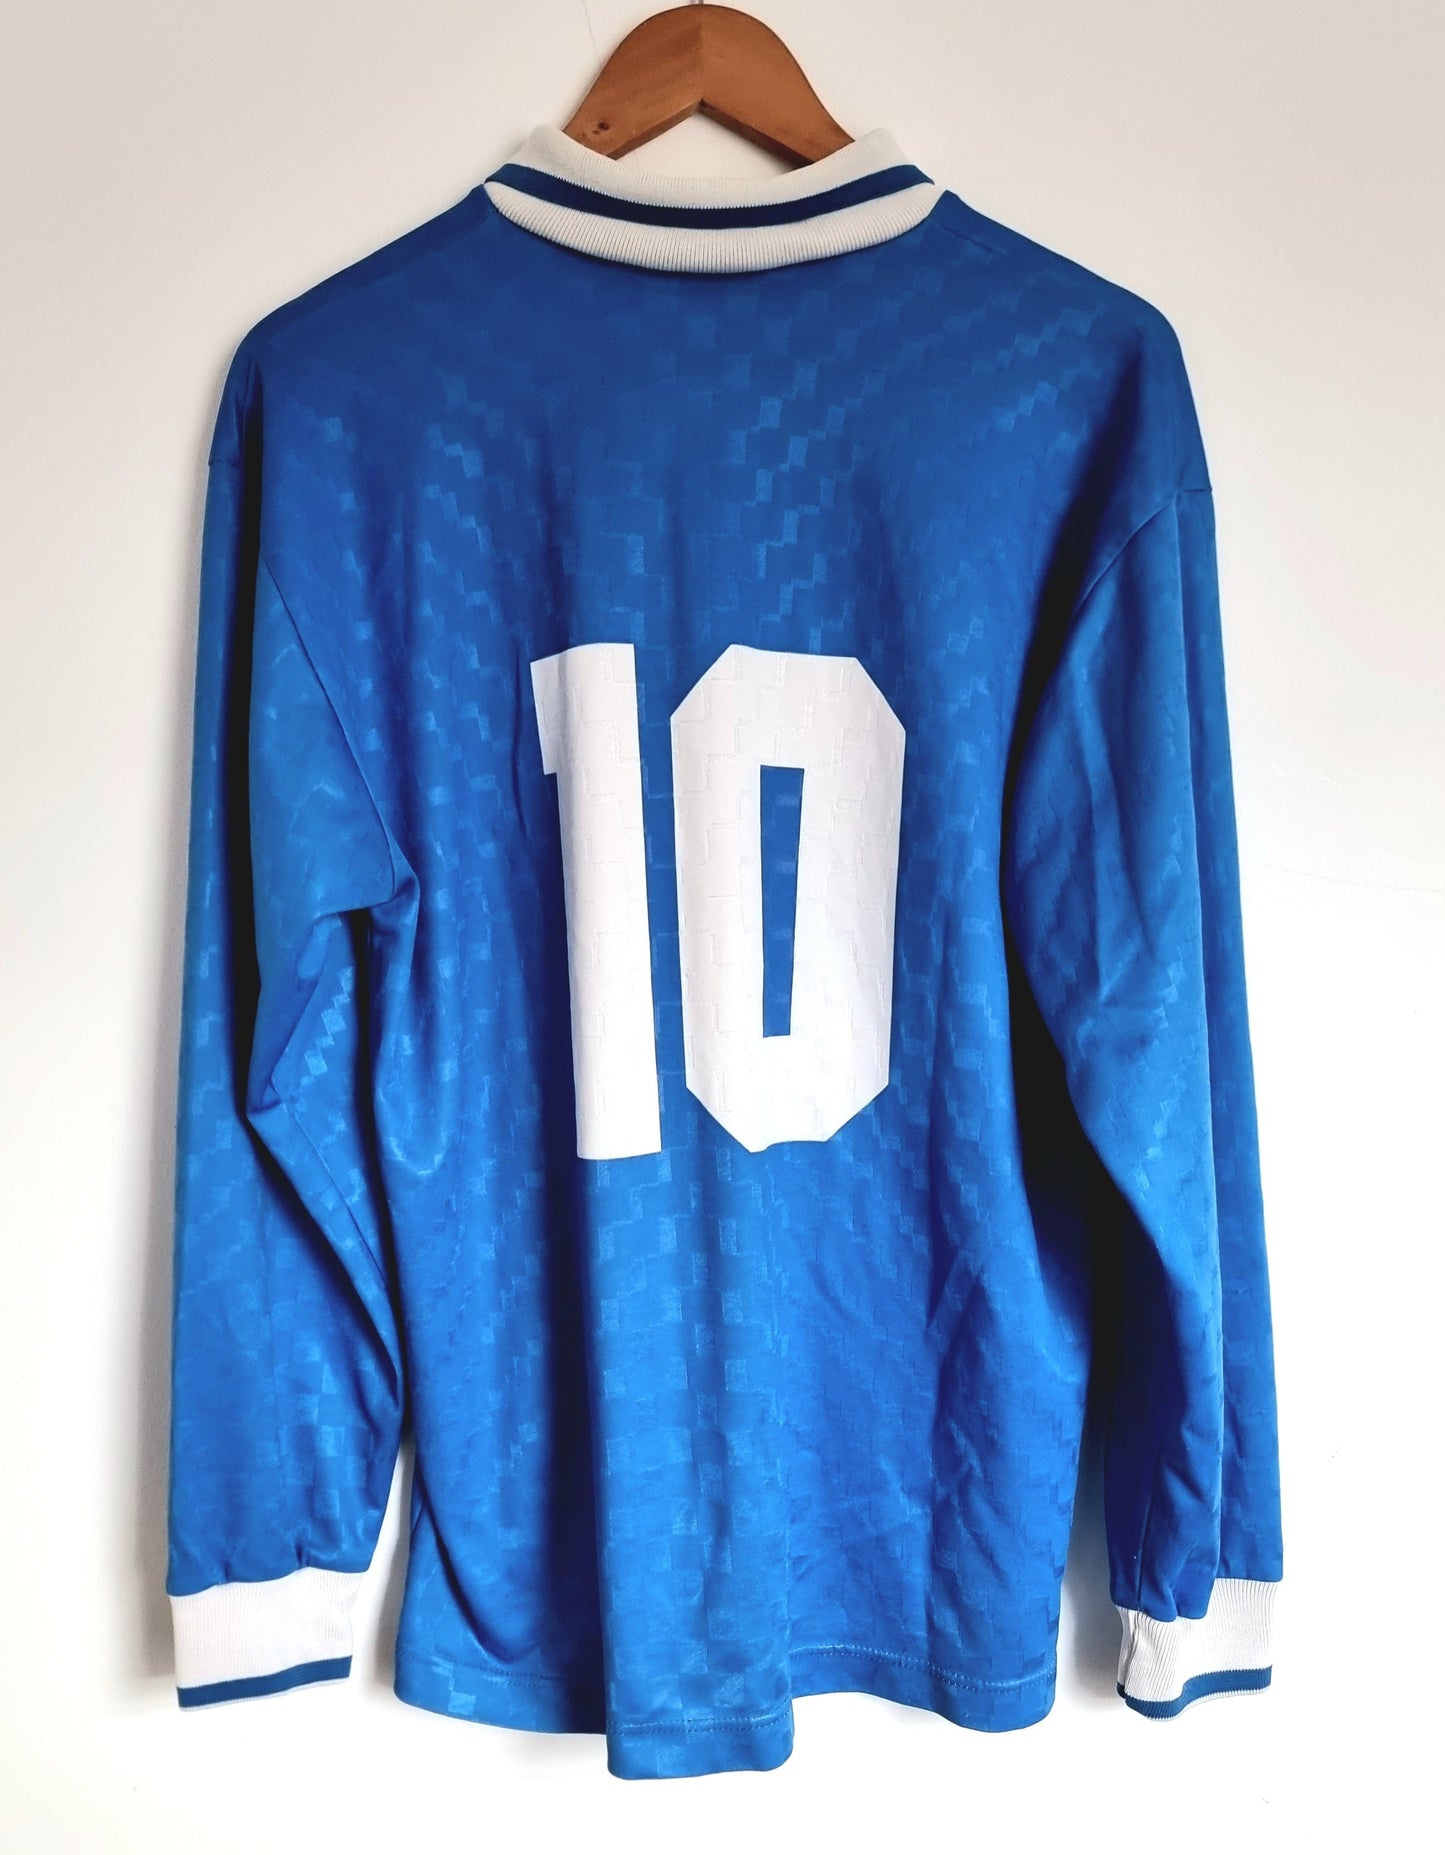 Lotto Napoli 95/96 '10 (Pizzi)' Long Sleeve Match Issue Shirt XL